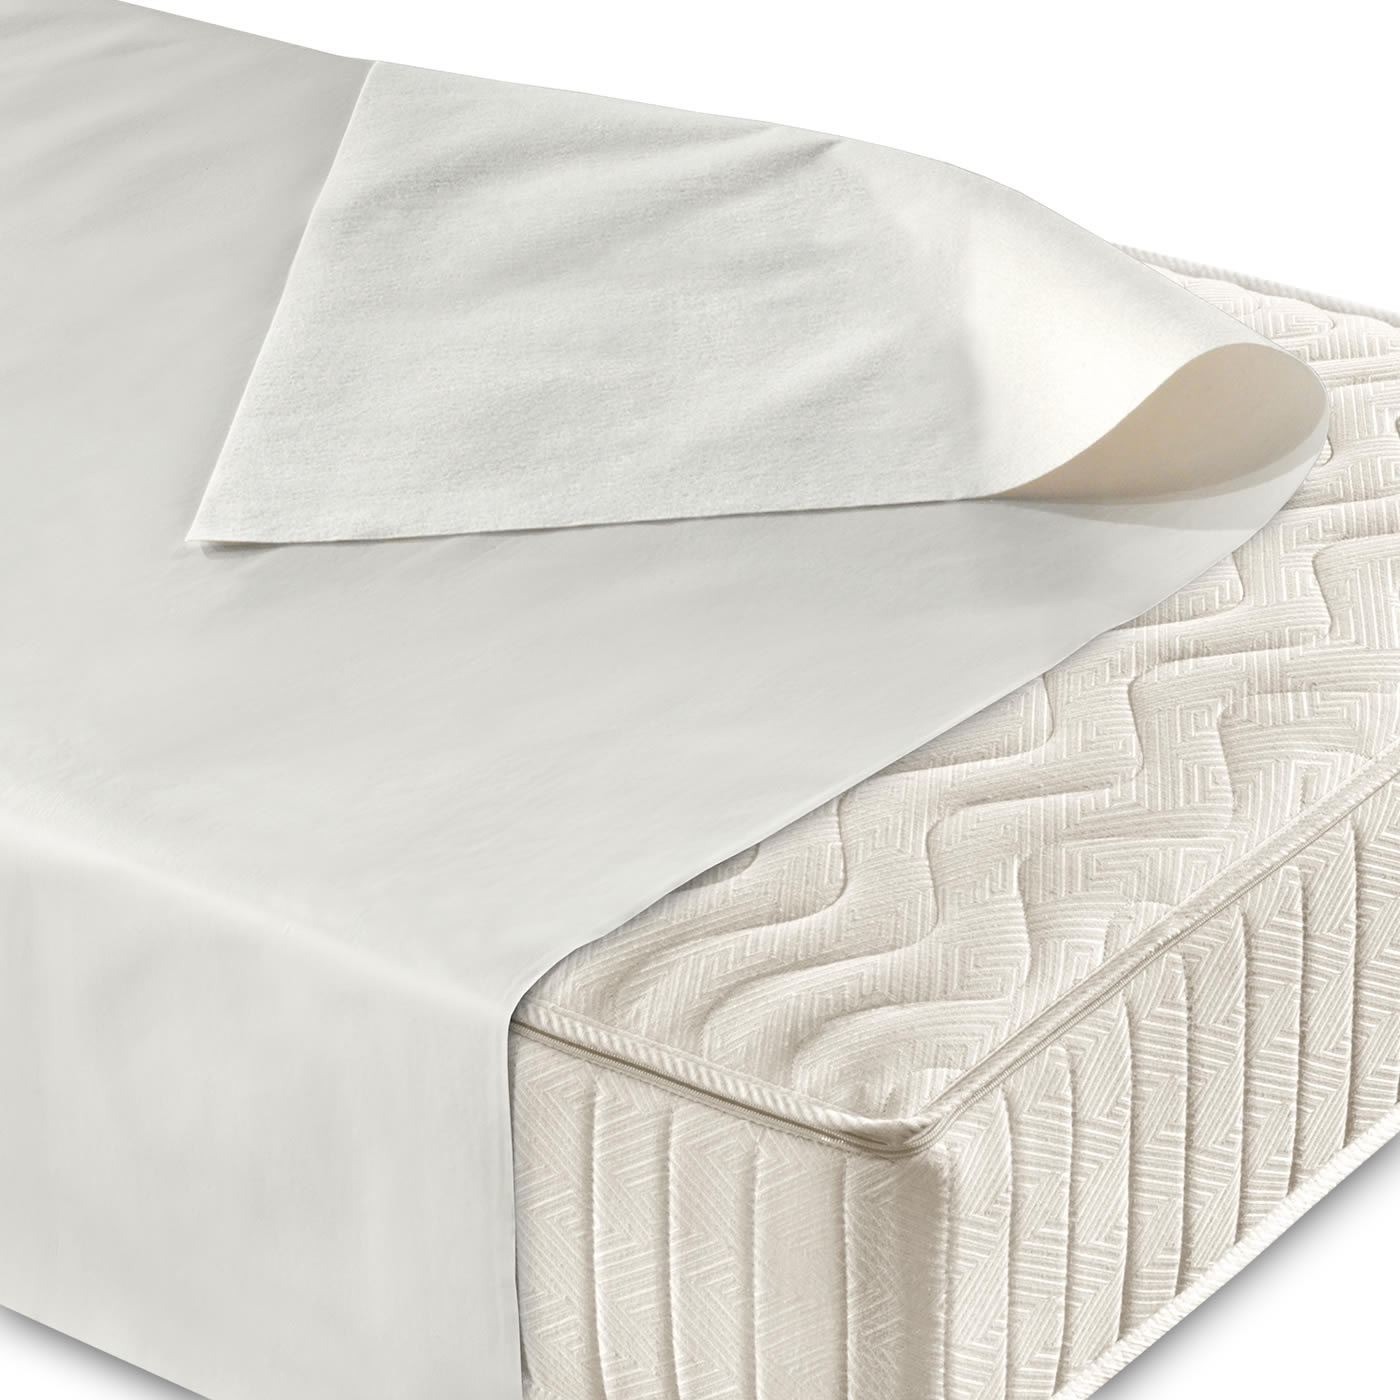 Traverse letto impermeabili rasate Higienic Pants 130x140